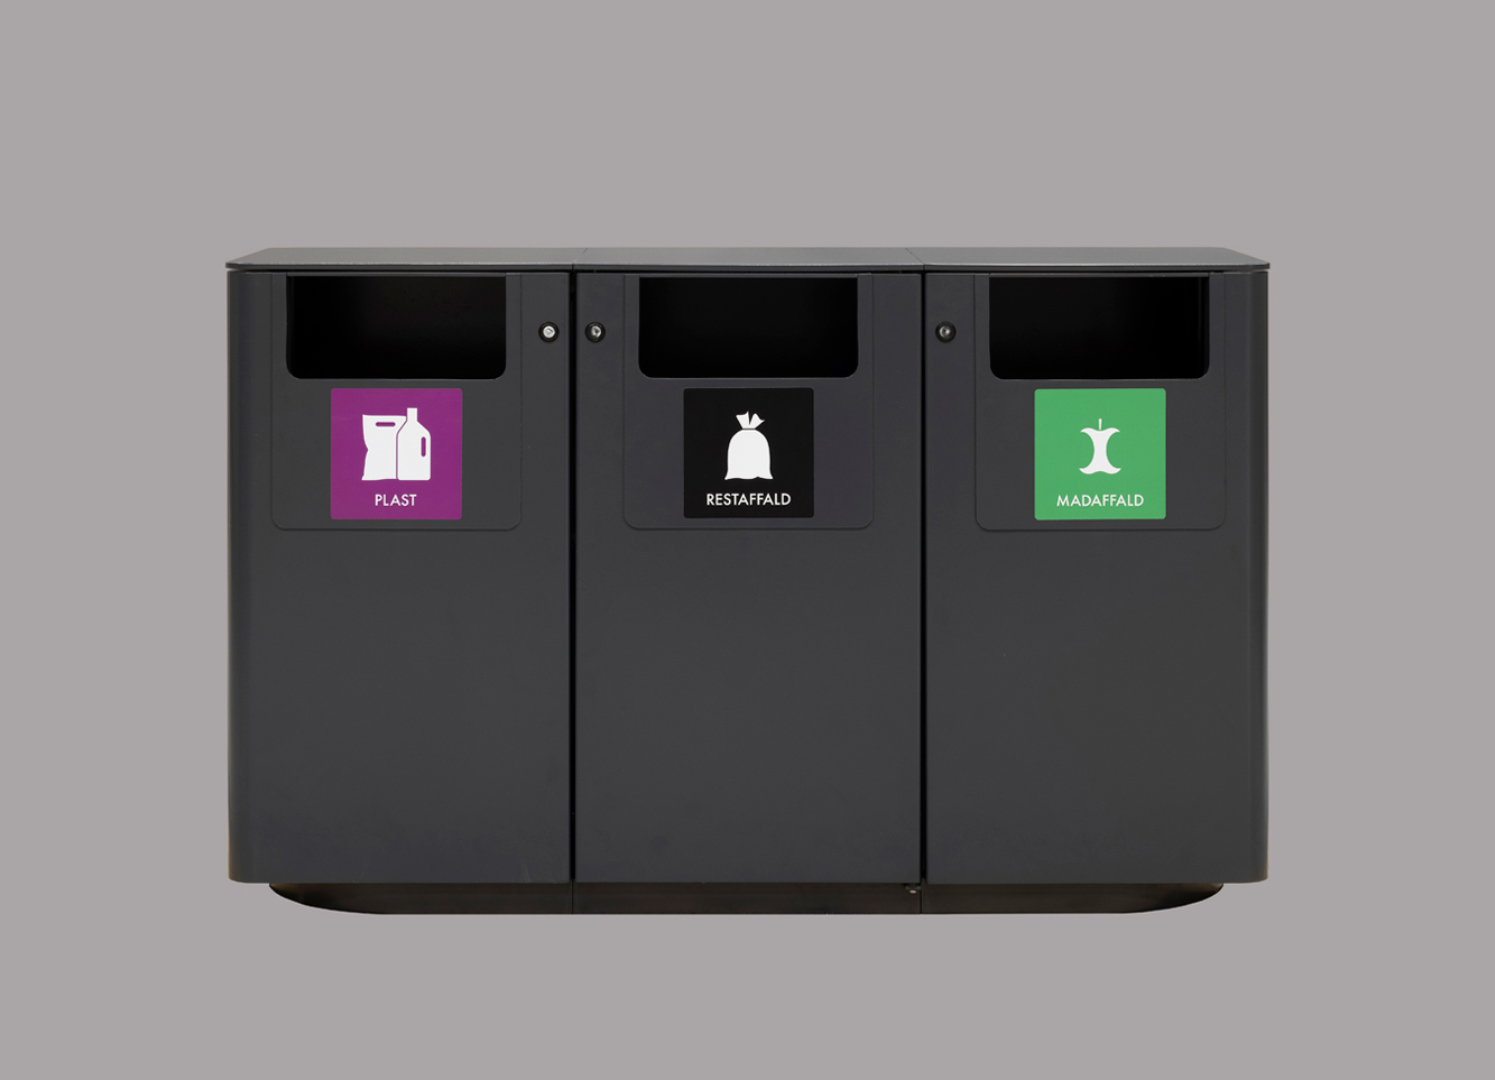 Modular recycling bin for public spaces